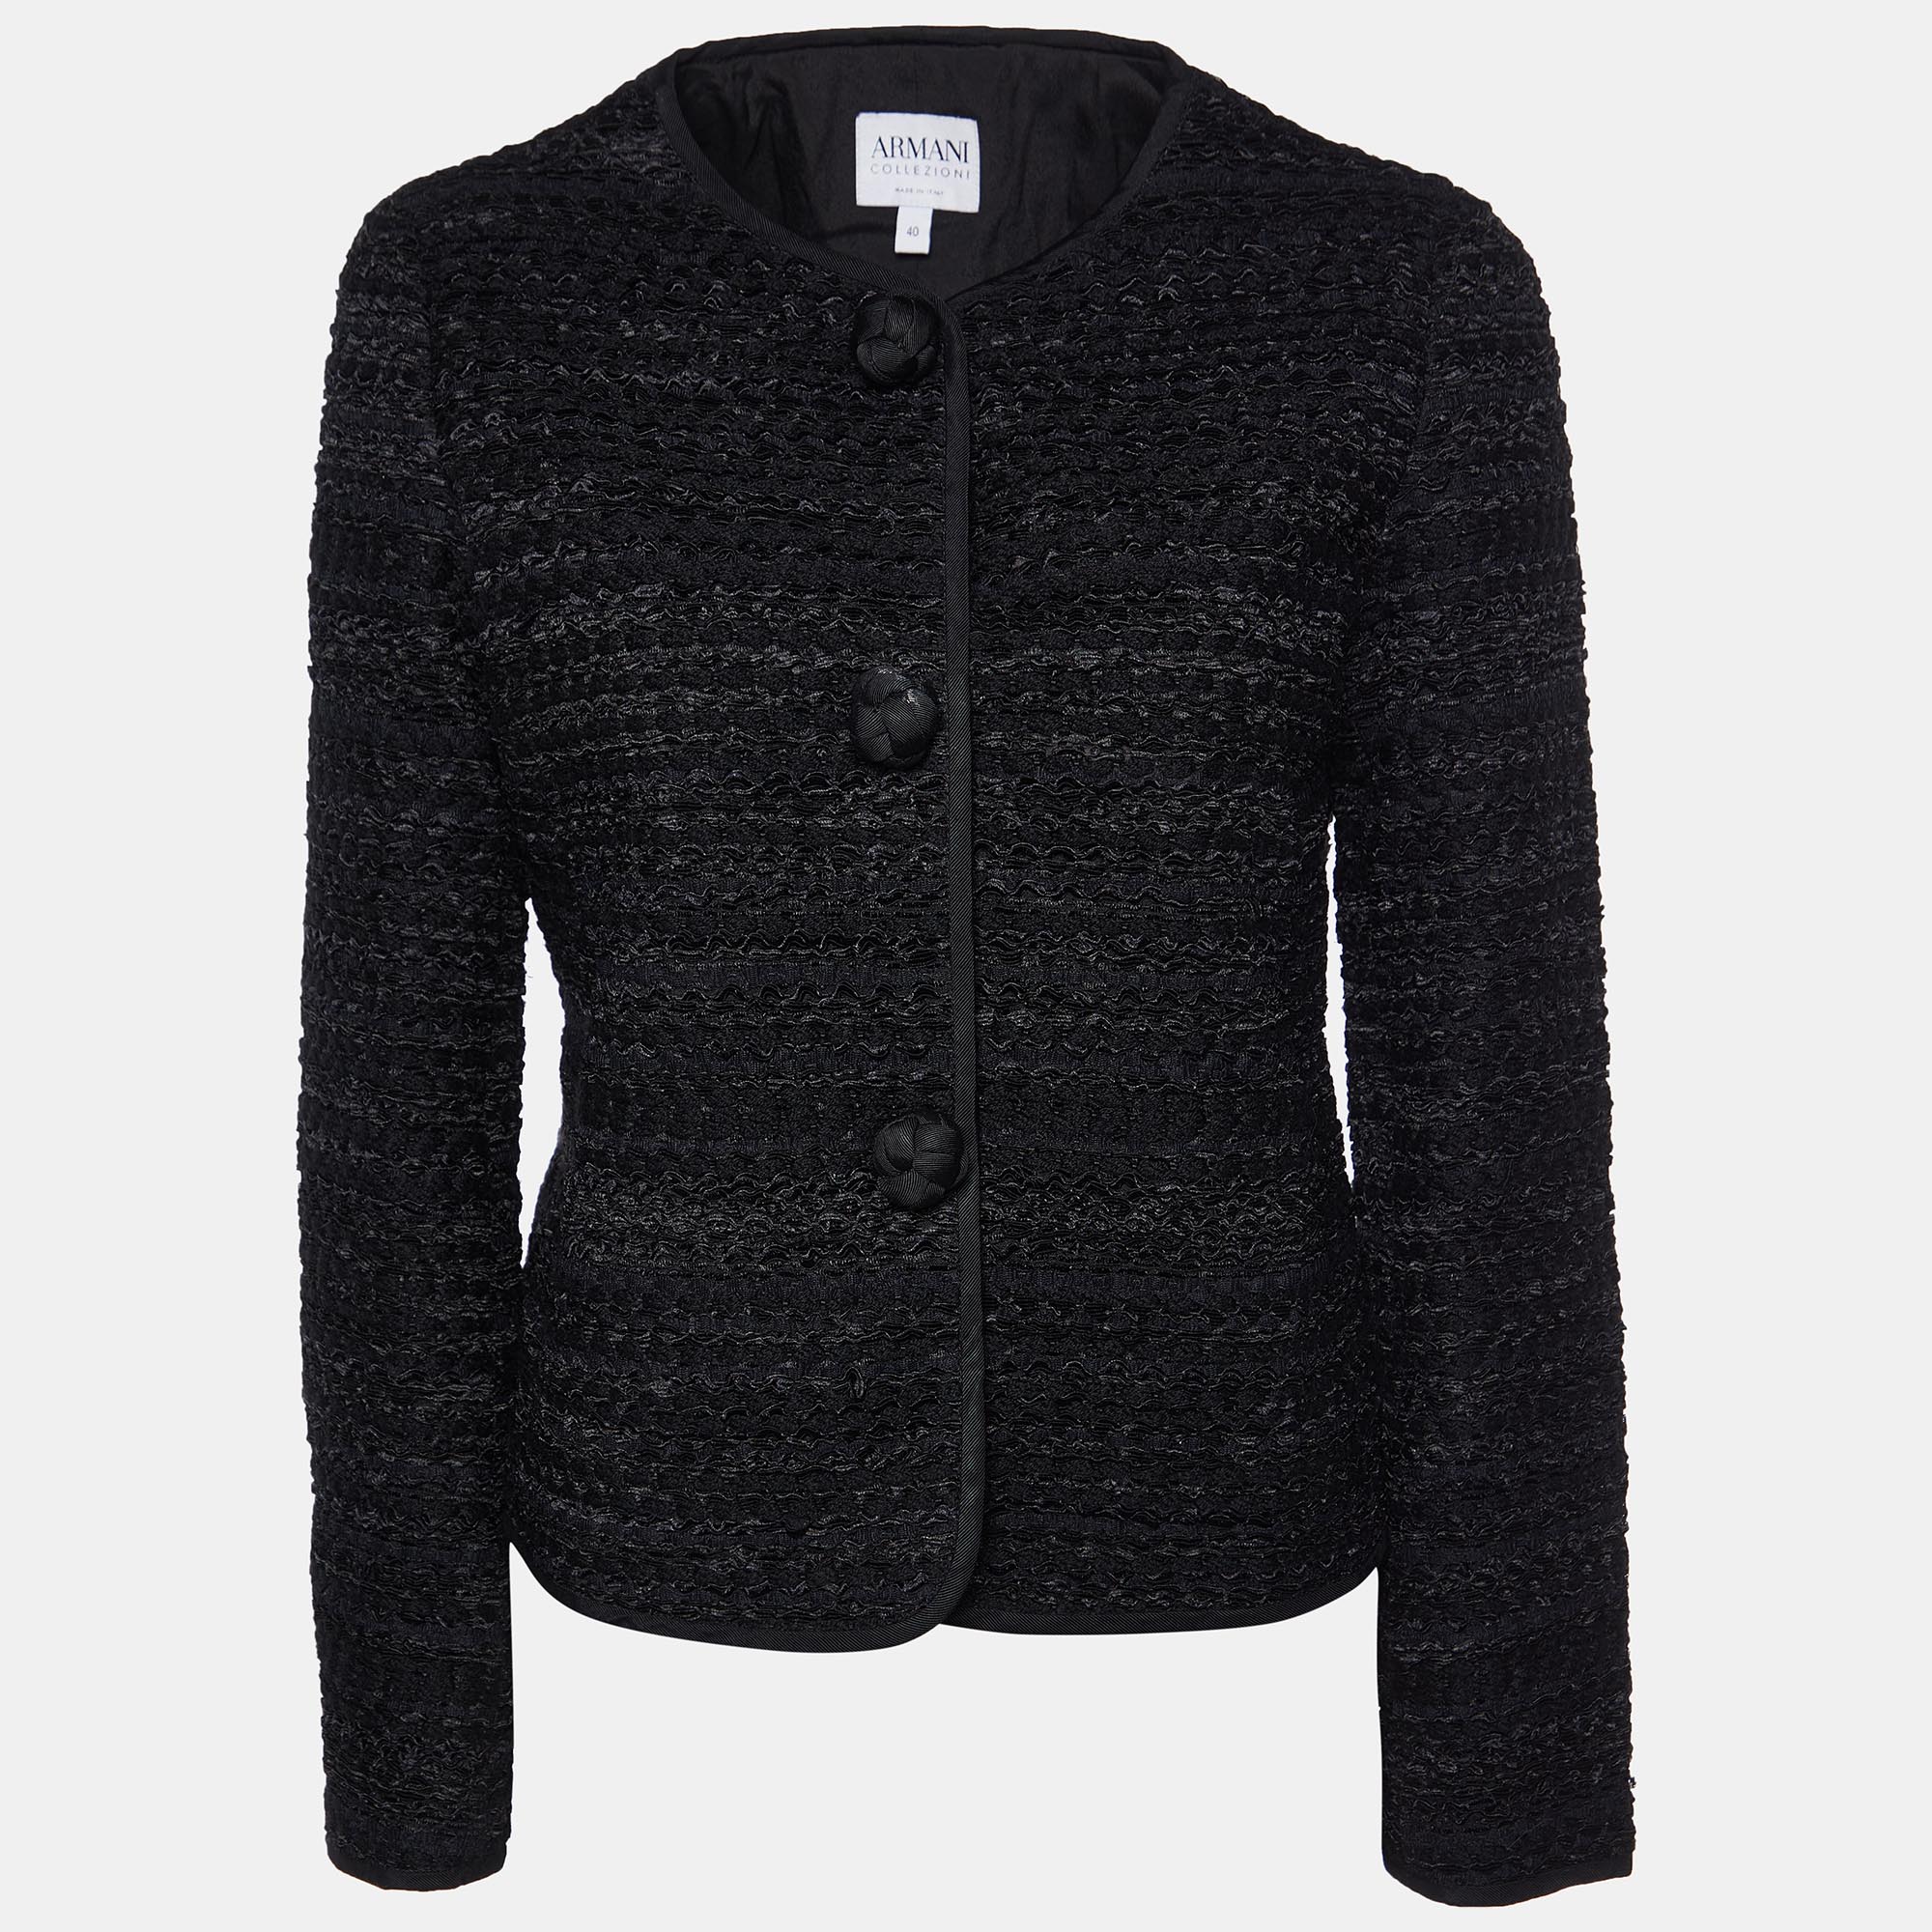 Armani collezioni black tweed button front jacket s